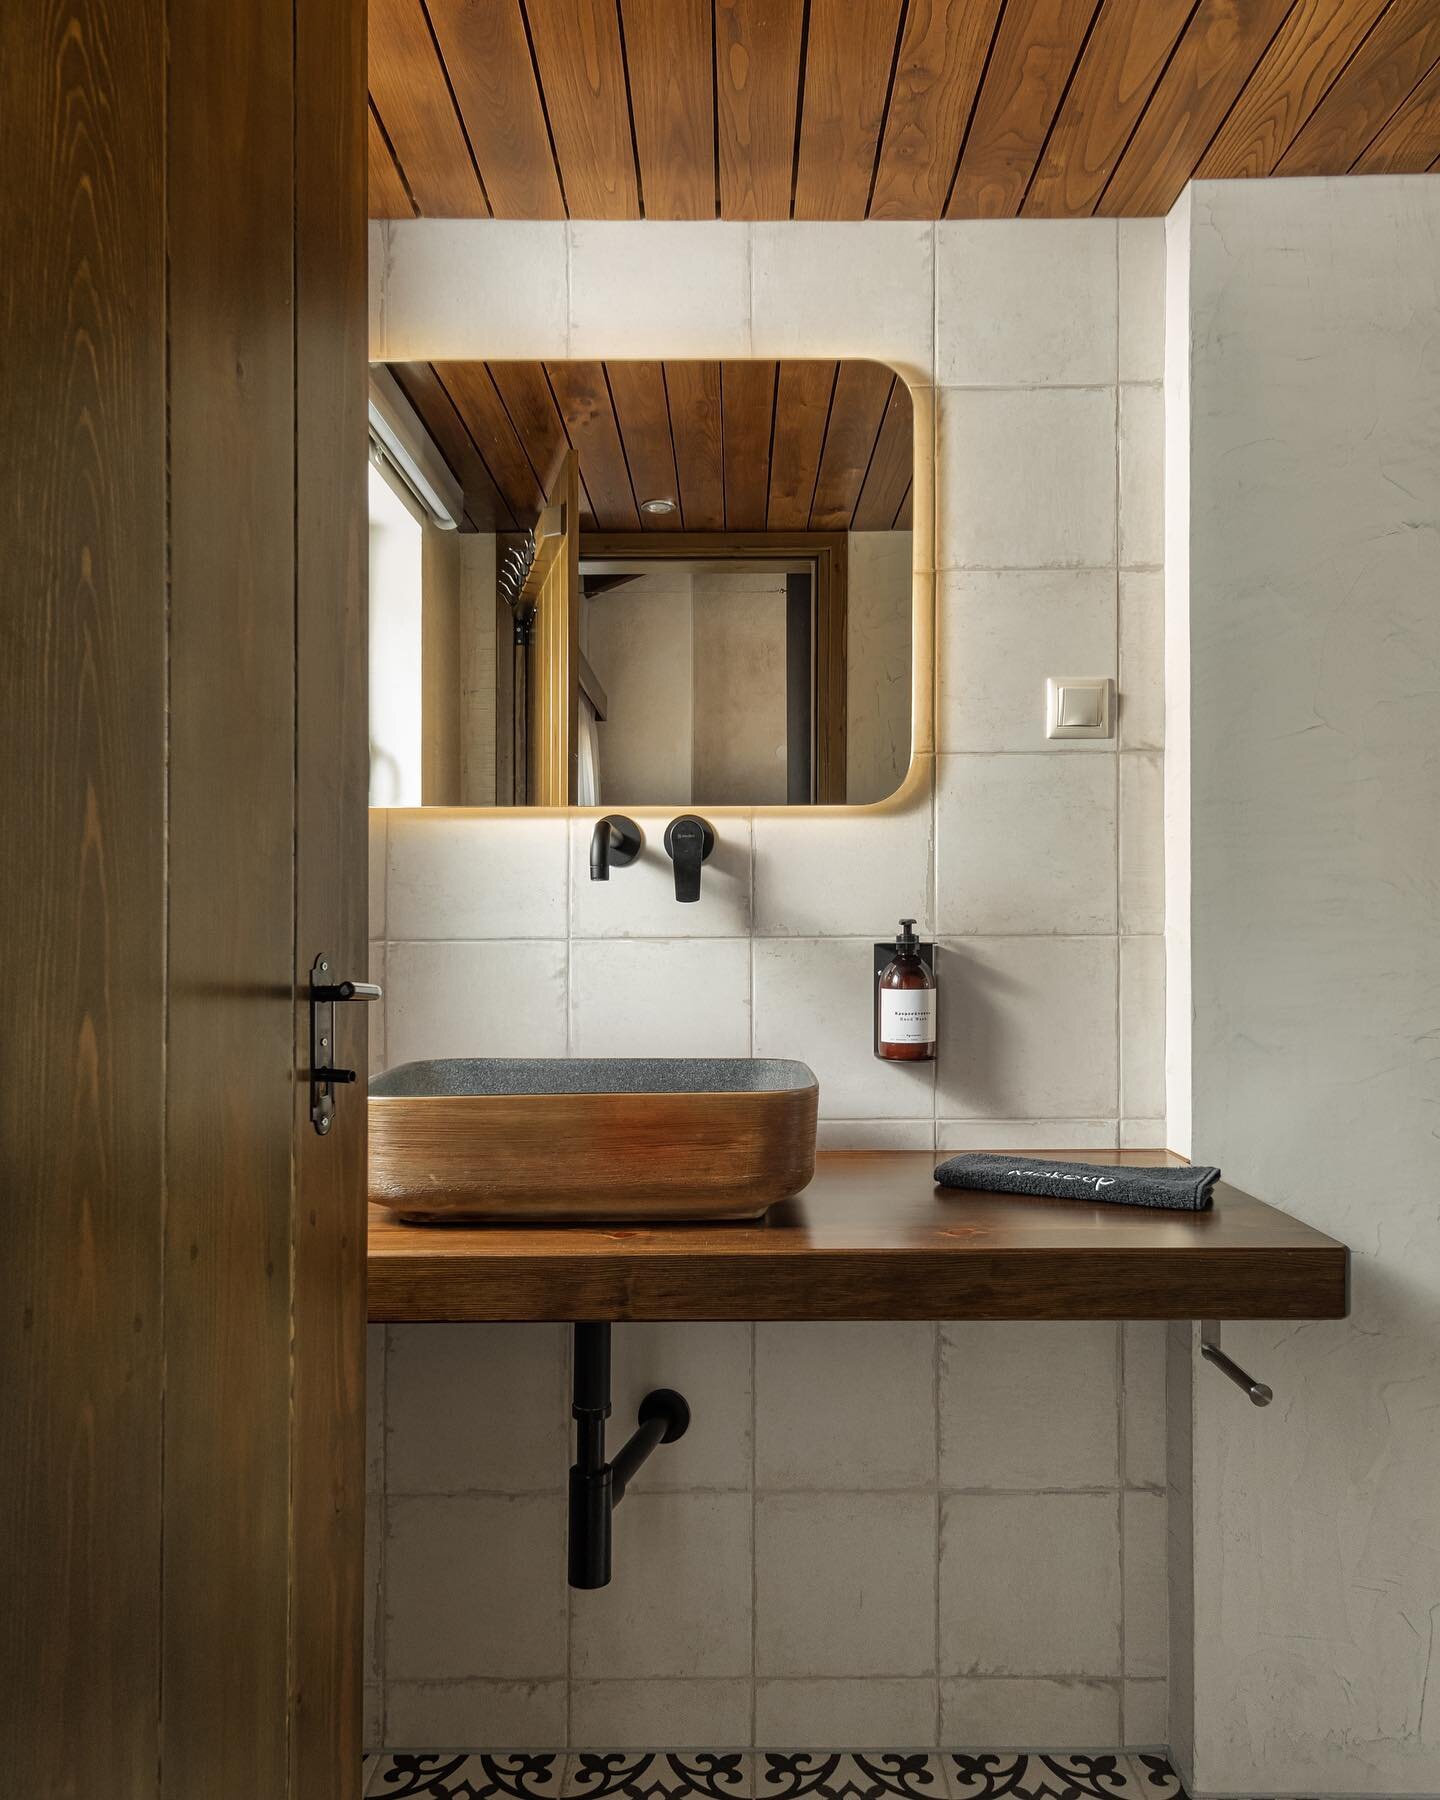 &bull; Design meets function (Suite 6 - Gregale Bathroom) 🌳

📍For bookings link in bio!
.
.
.
📸@lefteris_kossaras 
@two_clicks_photography 
.
.
.
#agramada #agramadatreehouse #xaniagramada #agramadaexperiences #architecture #luxurylodges #interior